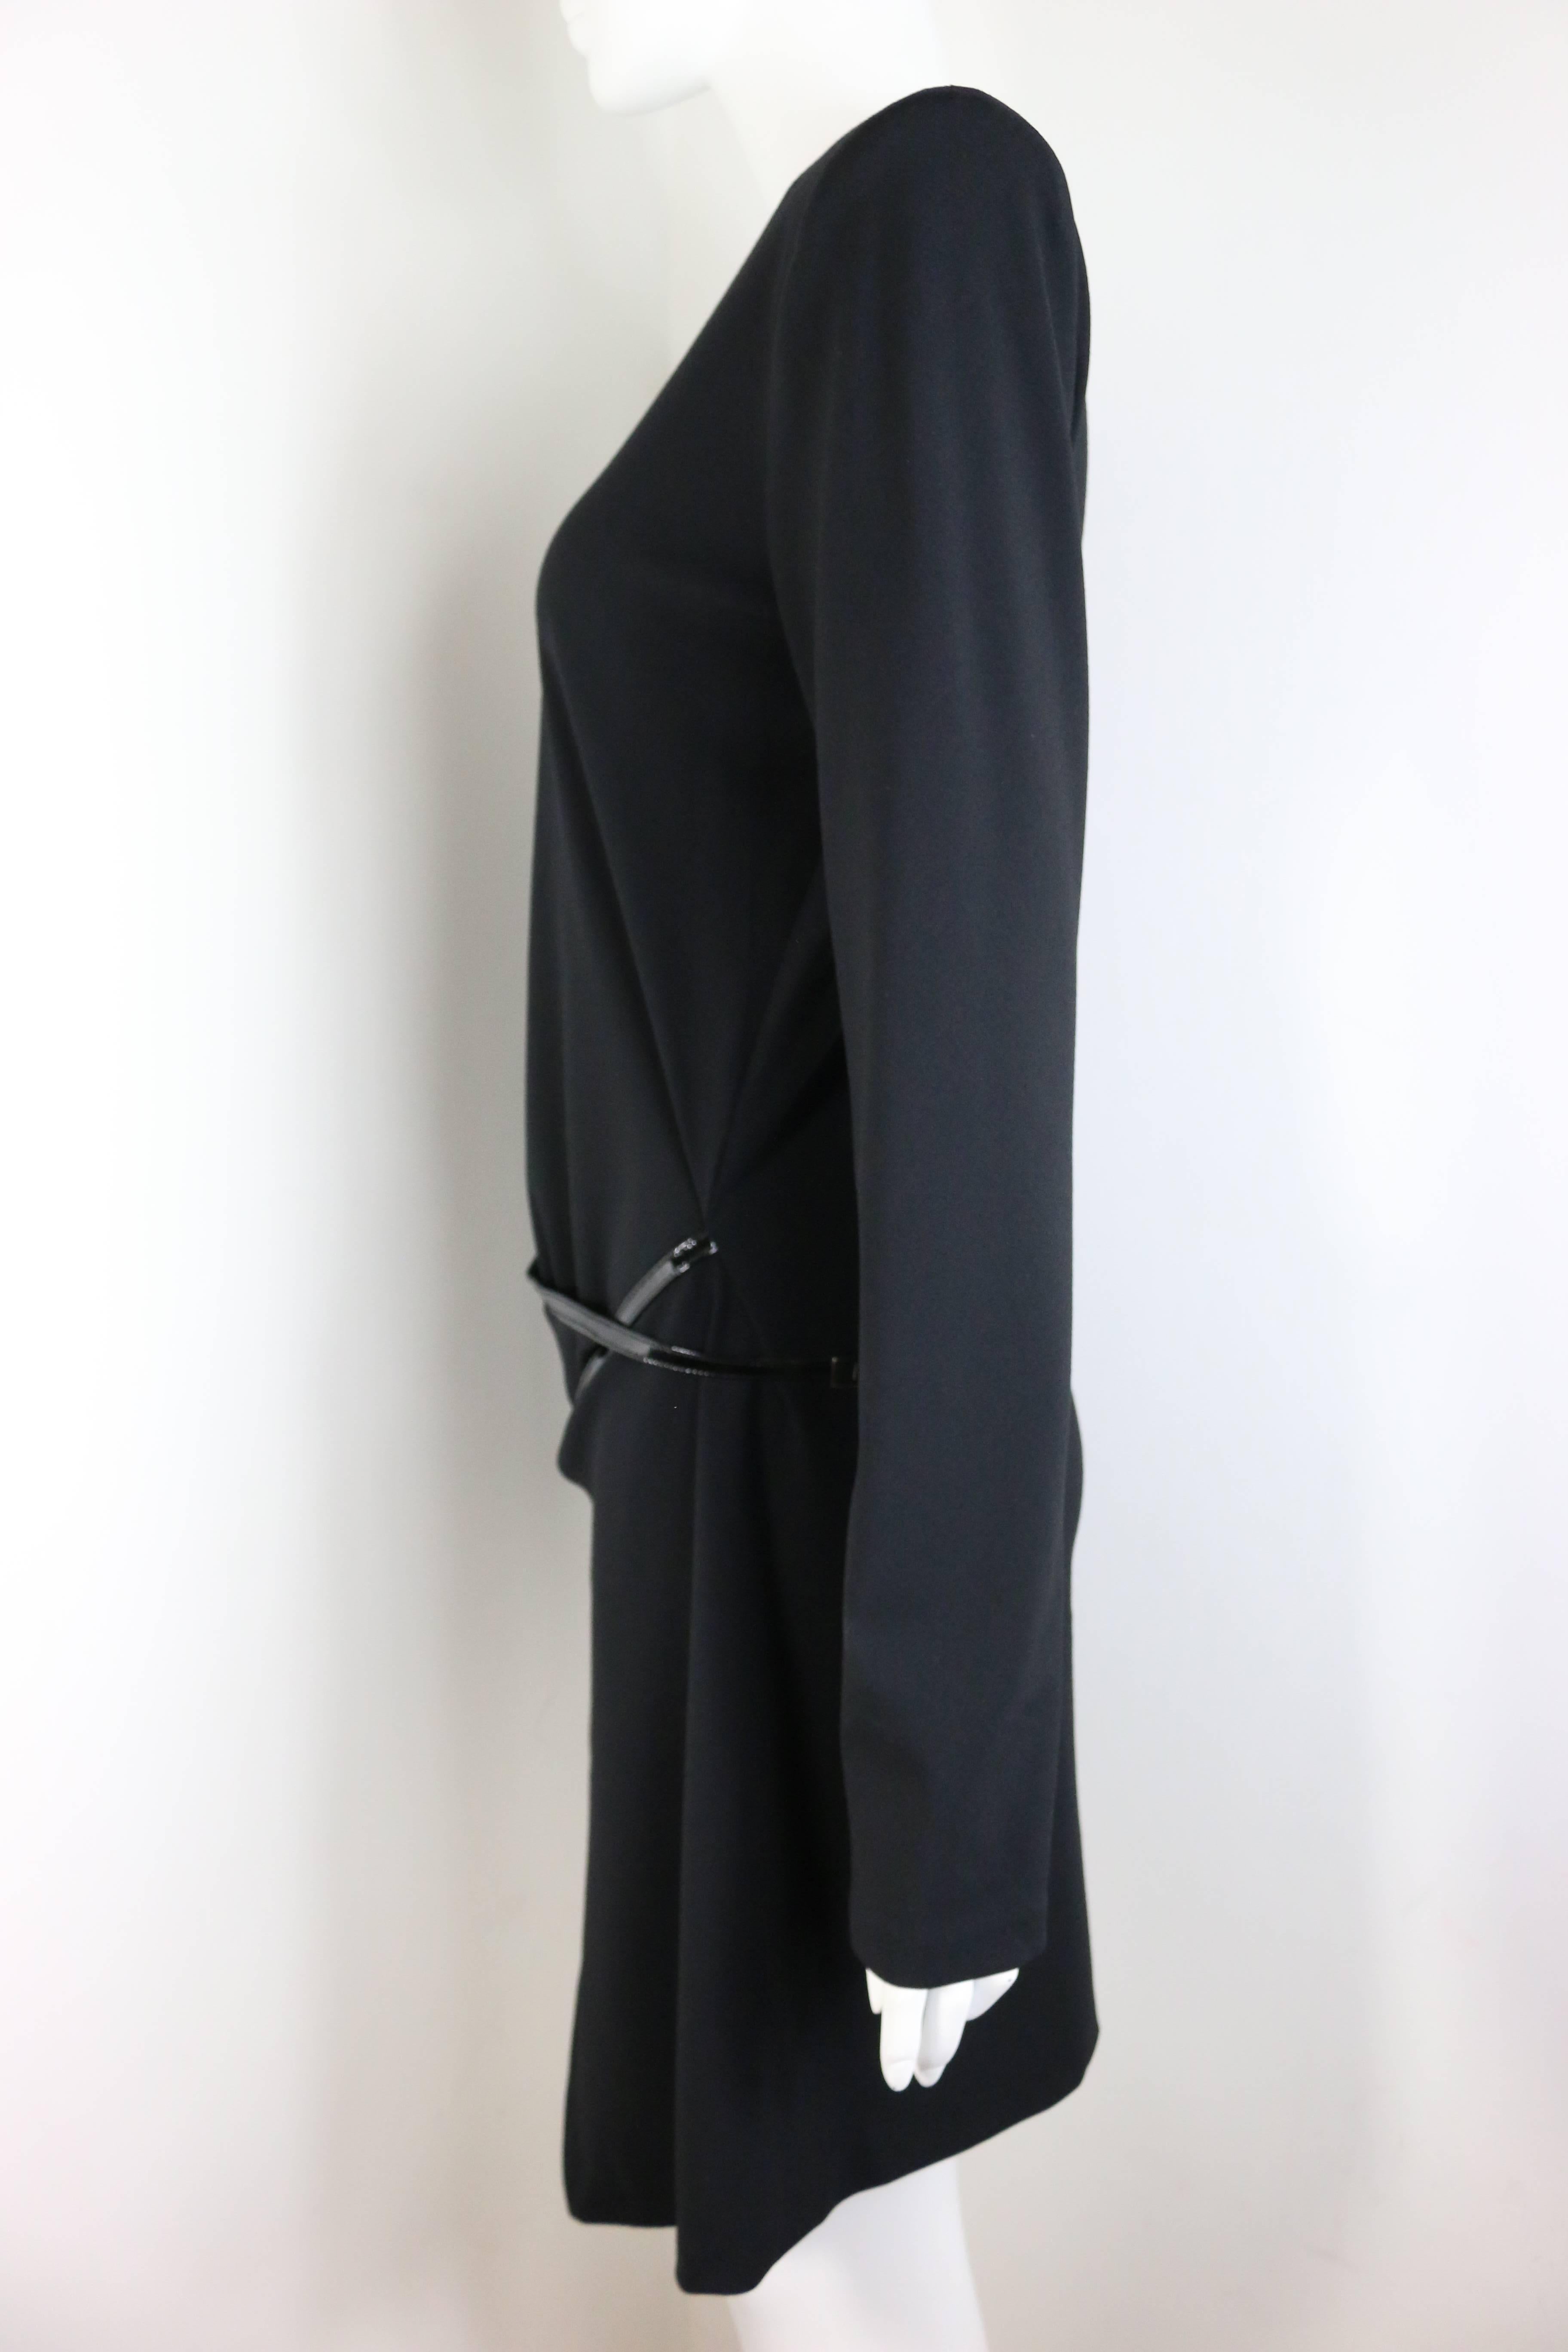 Noir Gucci By Tom Ford - Mini robe noire en vente